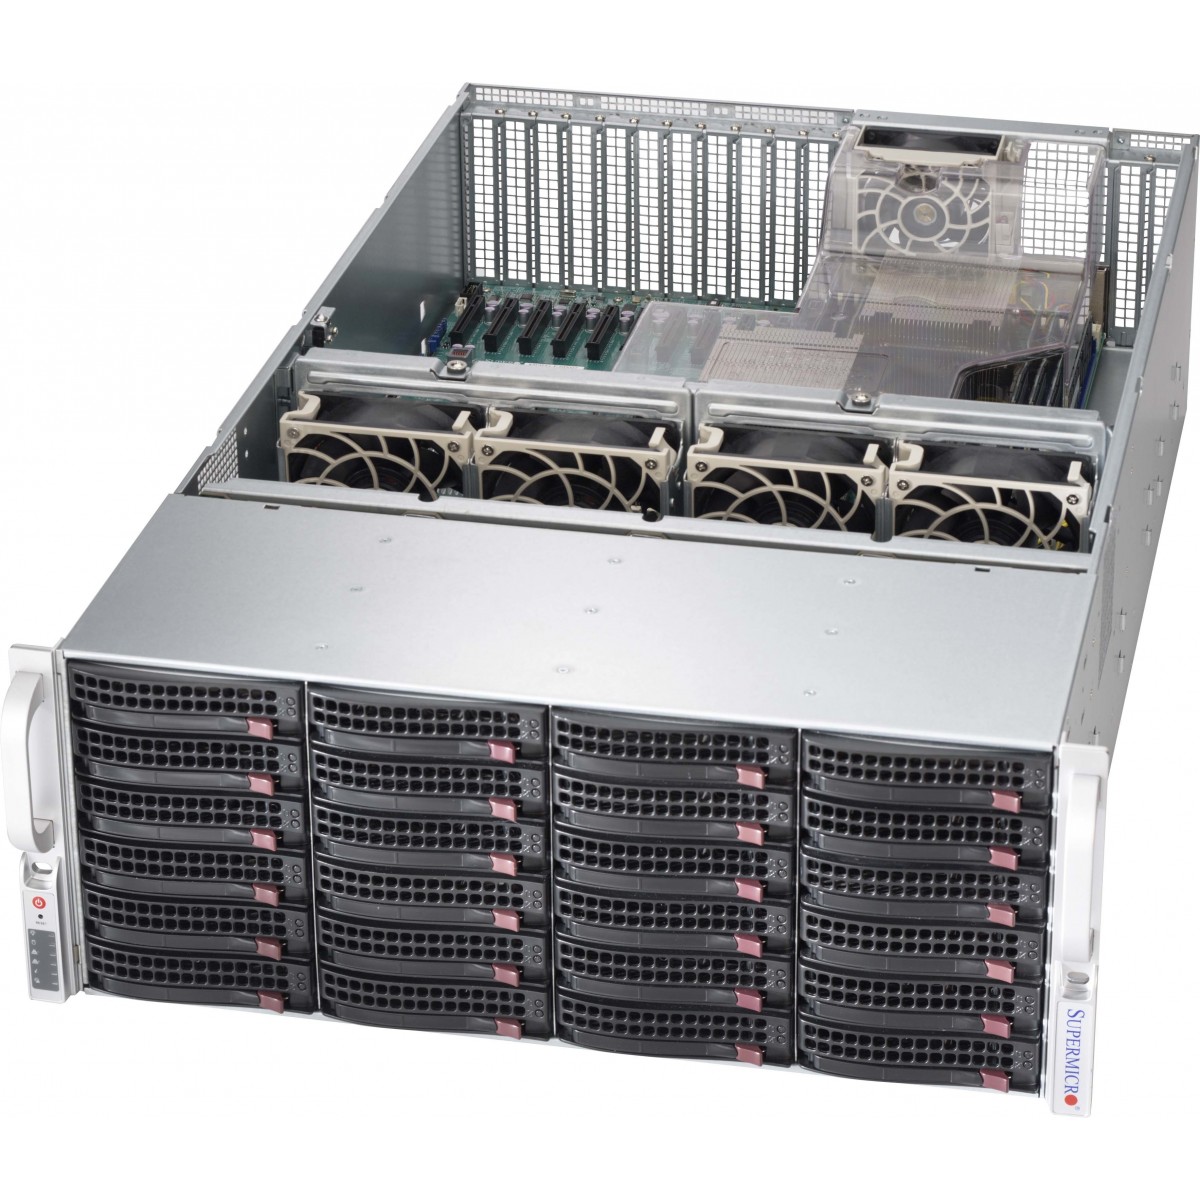 Supermicro CSE-846XE2C-R1K23B - Rack - Server - Black - ATX,EATX - 4U - Fan fail,HDD,LAN,Power,Power fail,System